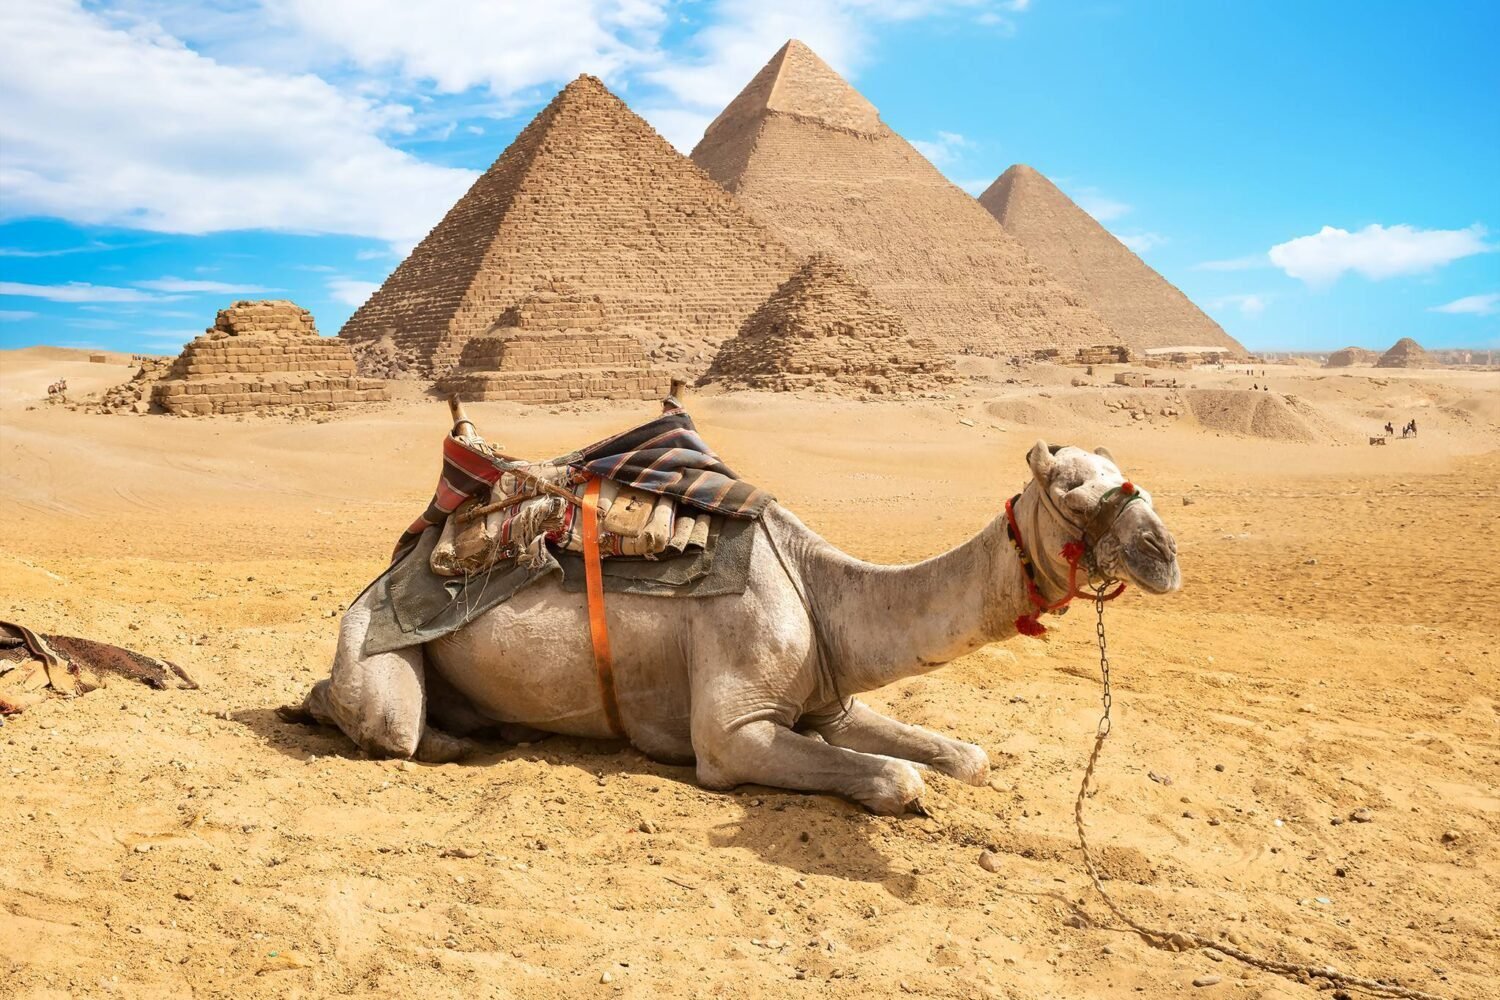 8 day vacation package - Giza pyramids